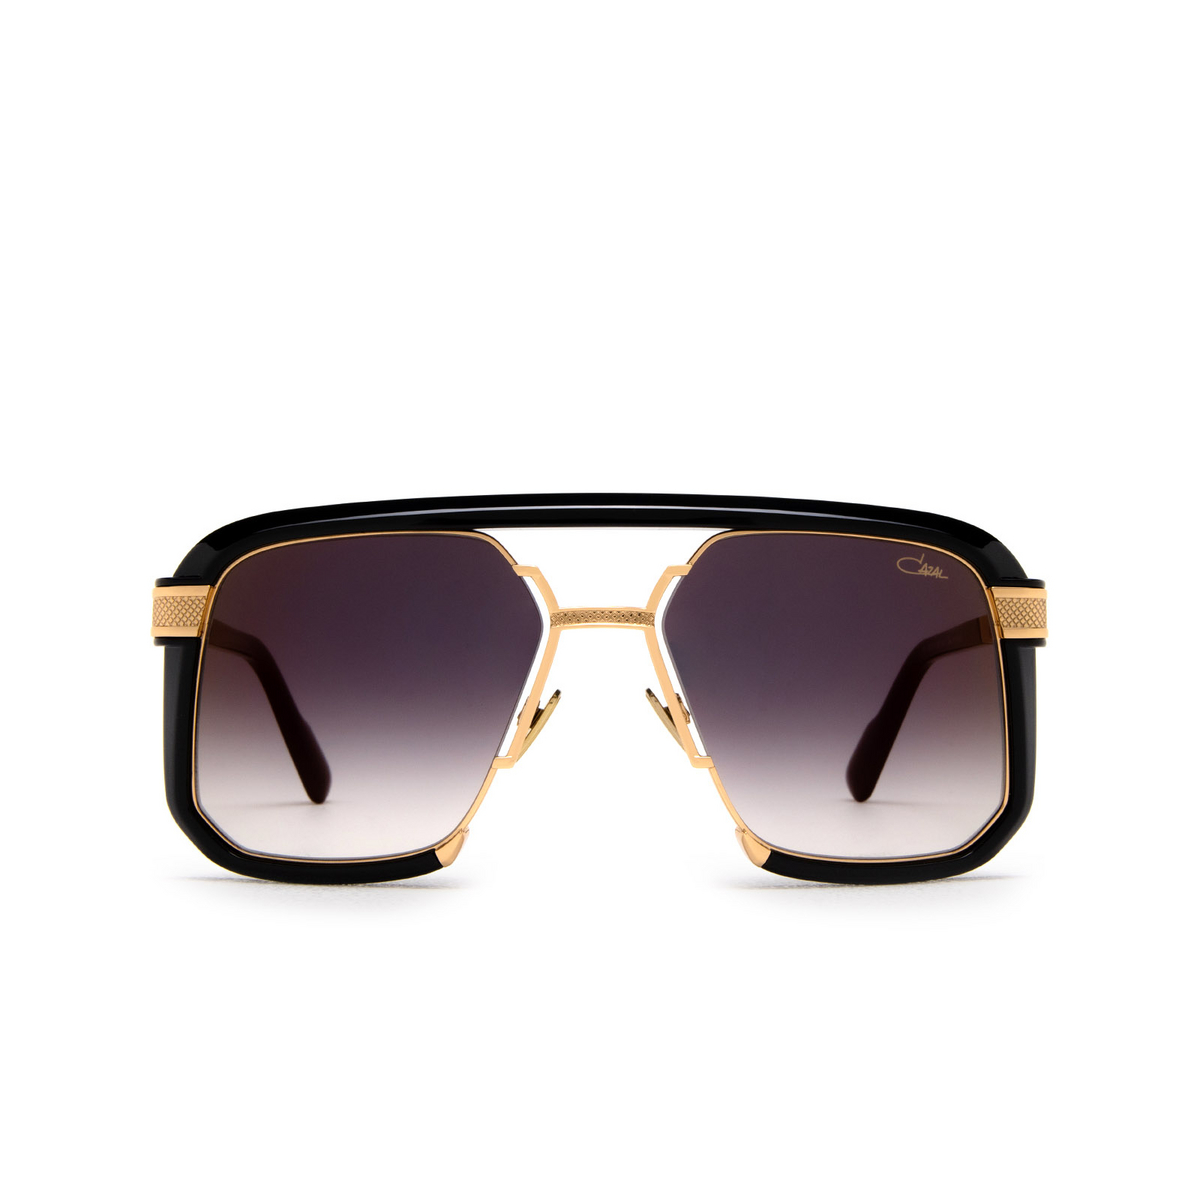 Cazal 682 Sunglasses 001 Black - Gold - front view